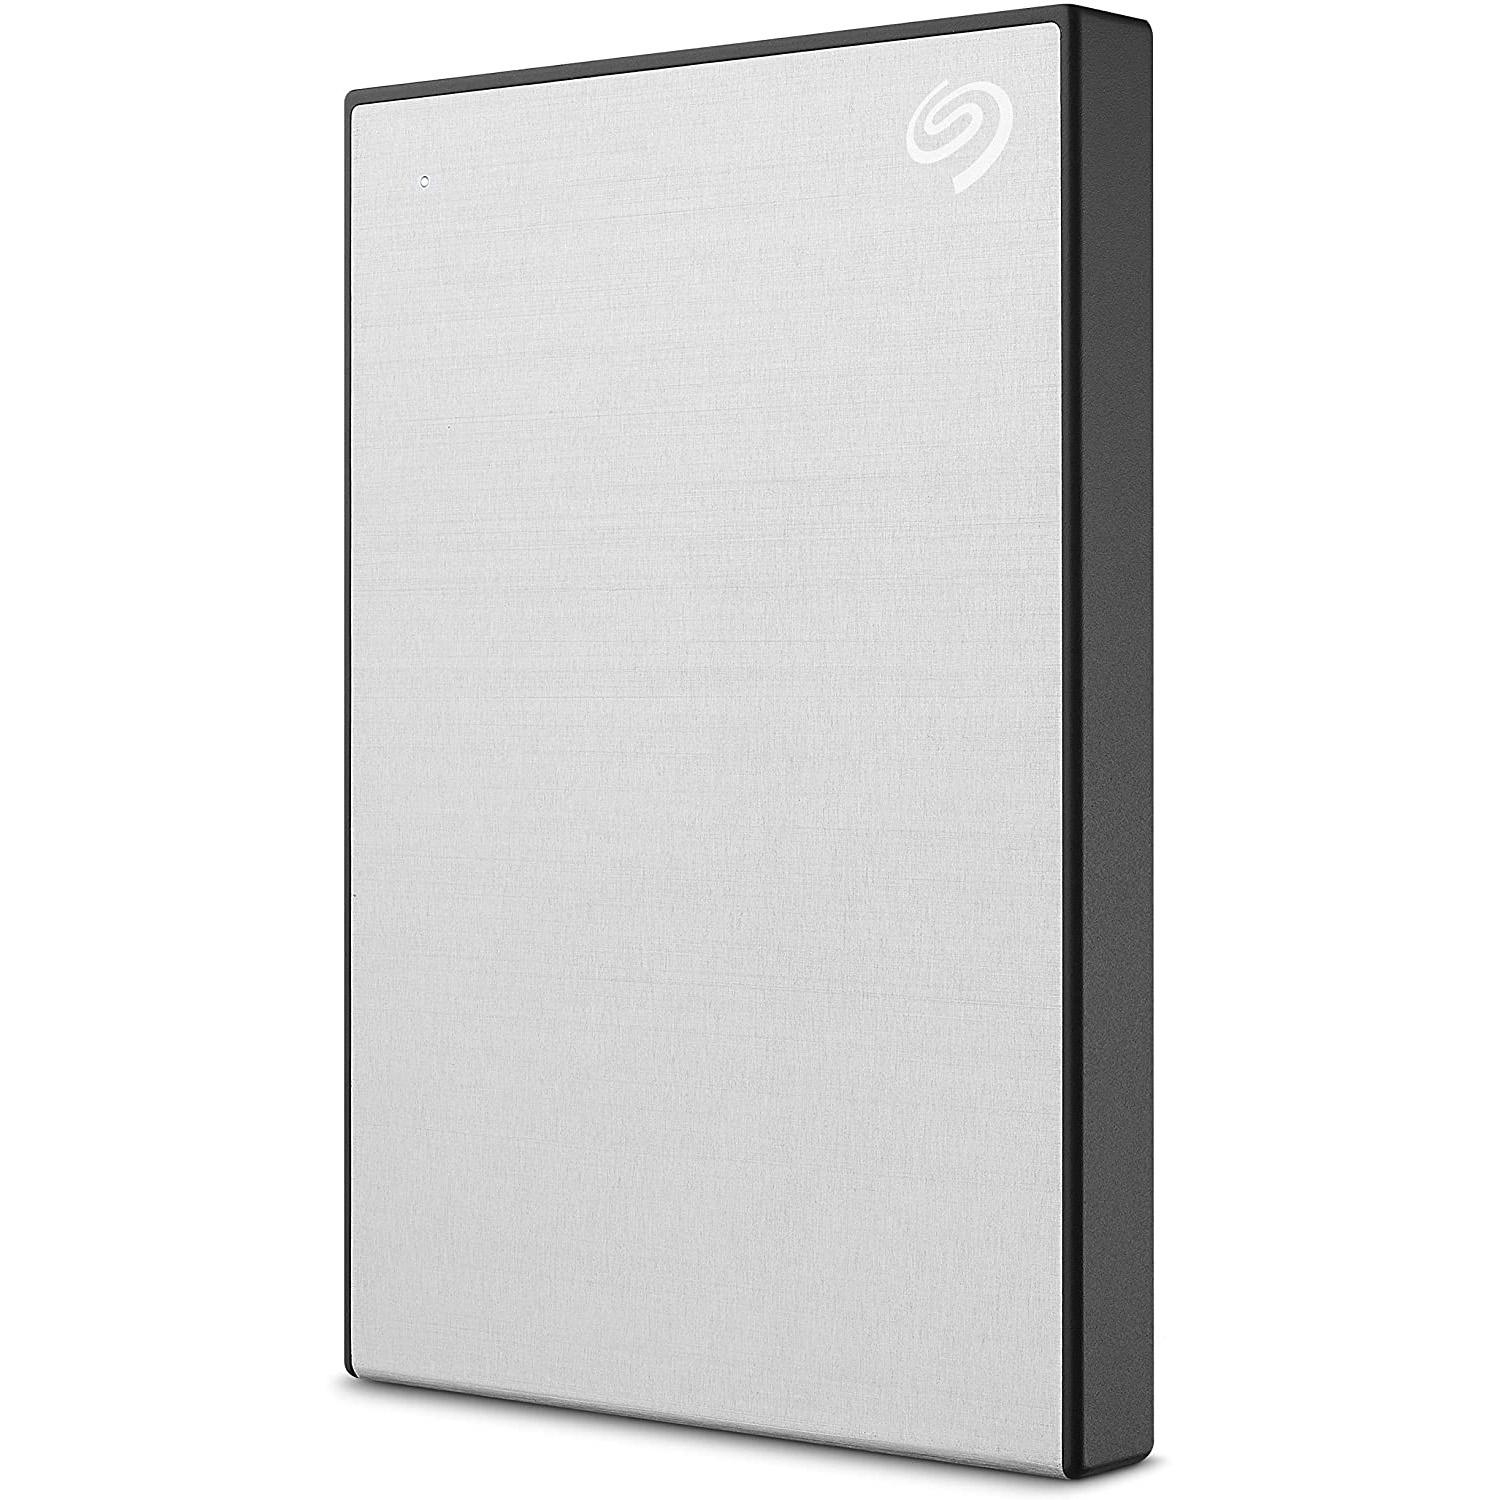 Seagate Backup Plus Slim 1TB Portable External Hard Drive for $44.99 Shipped